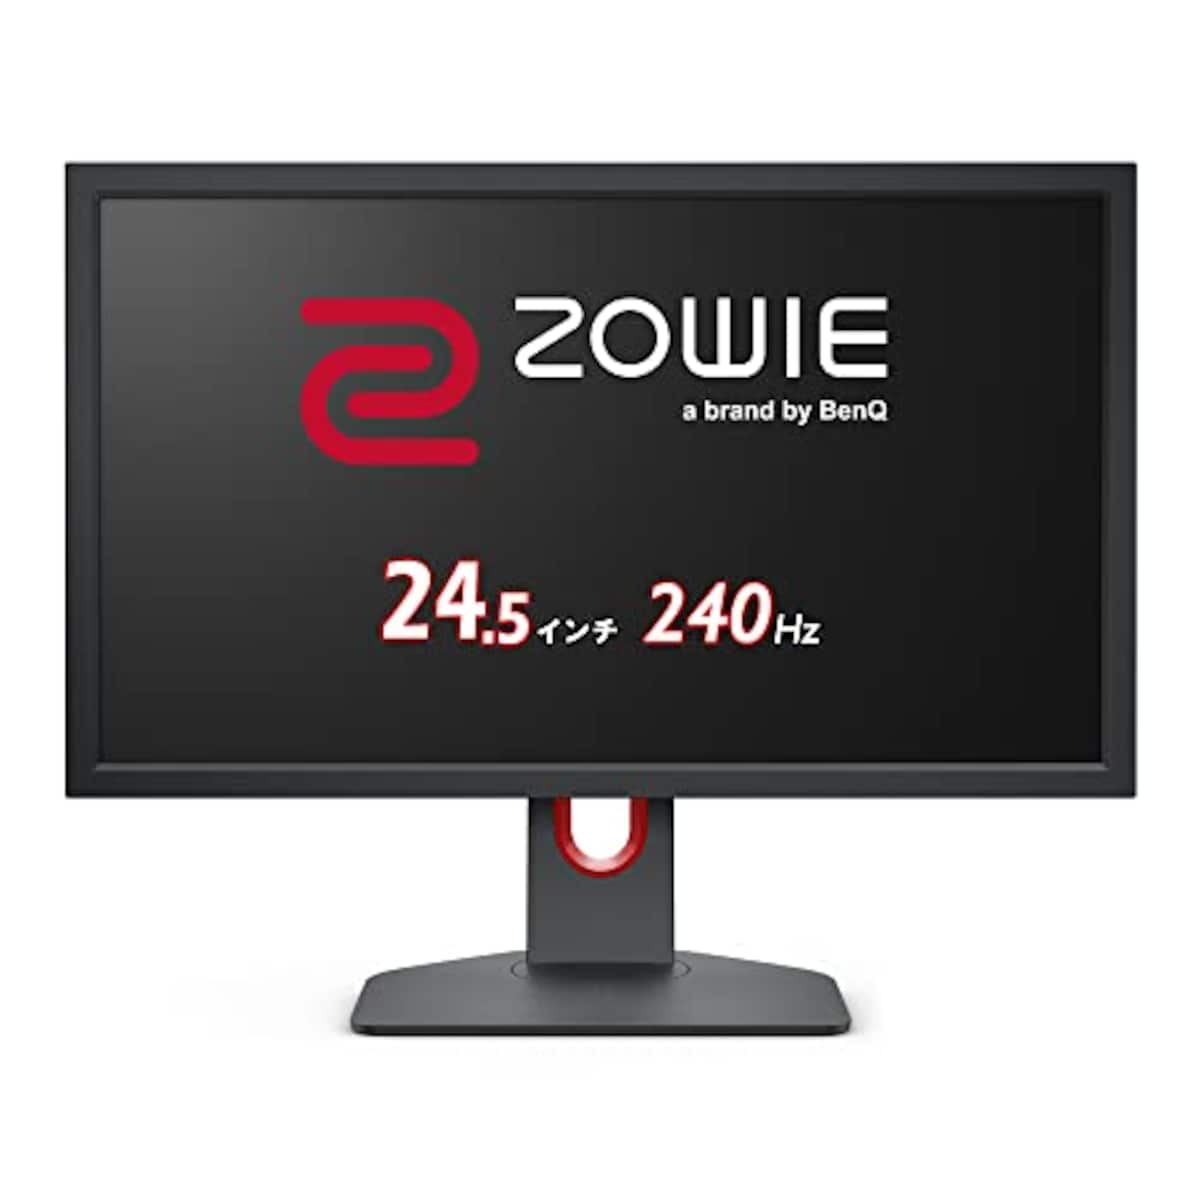 BenQ ZOWIE ゲーミングモニター XL2540K 24.5インチ 240Hz フルHD 高速応答速度/Black eQualizer/Color Vibrance/HDMI2.0 x3, DisplayPort1.2 x 1 4系統入力/スウィーベルおよび高さ調整機能…